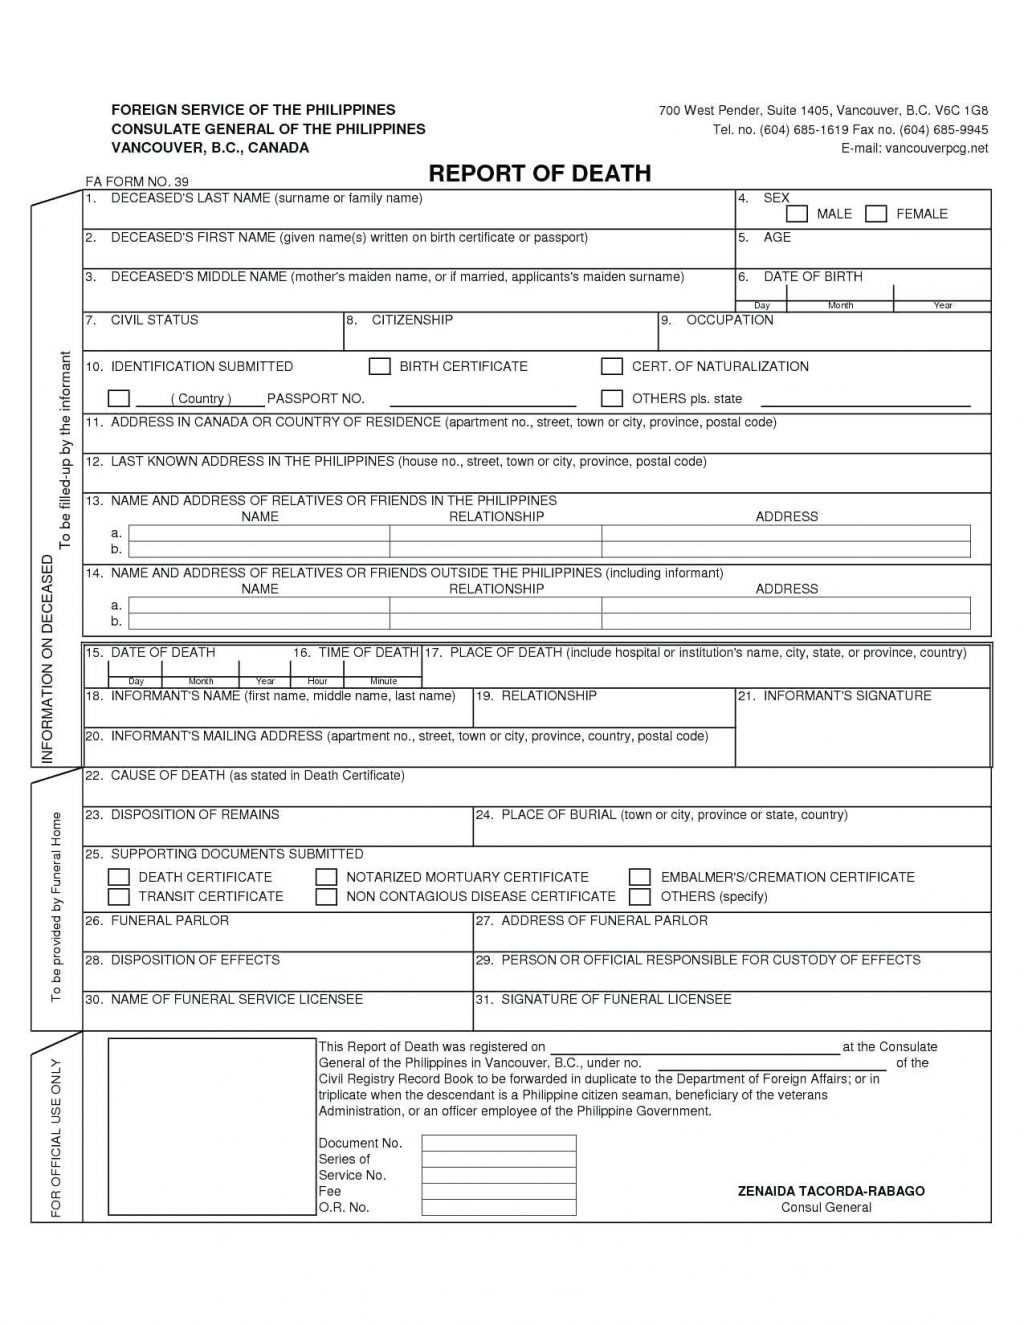 Death Certificate Translation Template Spanish To English Pertaining To Death Certificate Translation Template